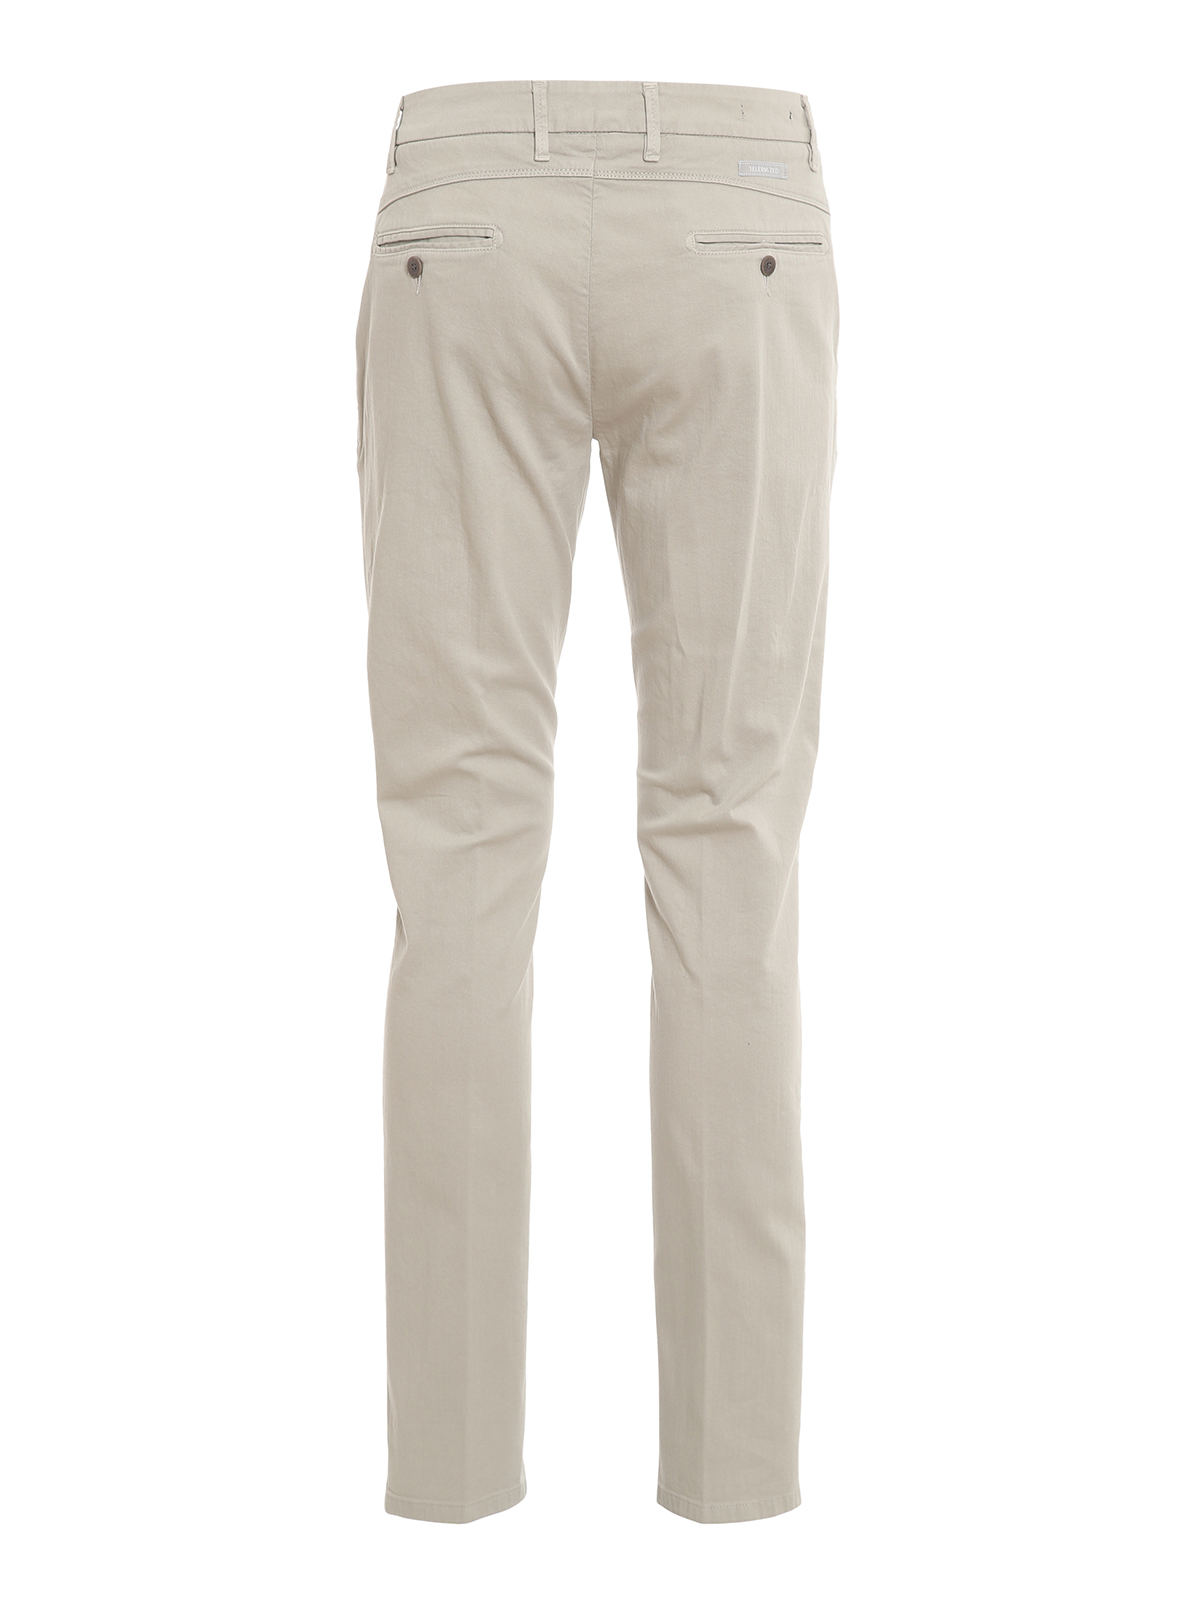 Teleria Zed - Roger pants - casual trousers - ROGERQHH060 | iKRIX.com